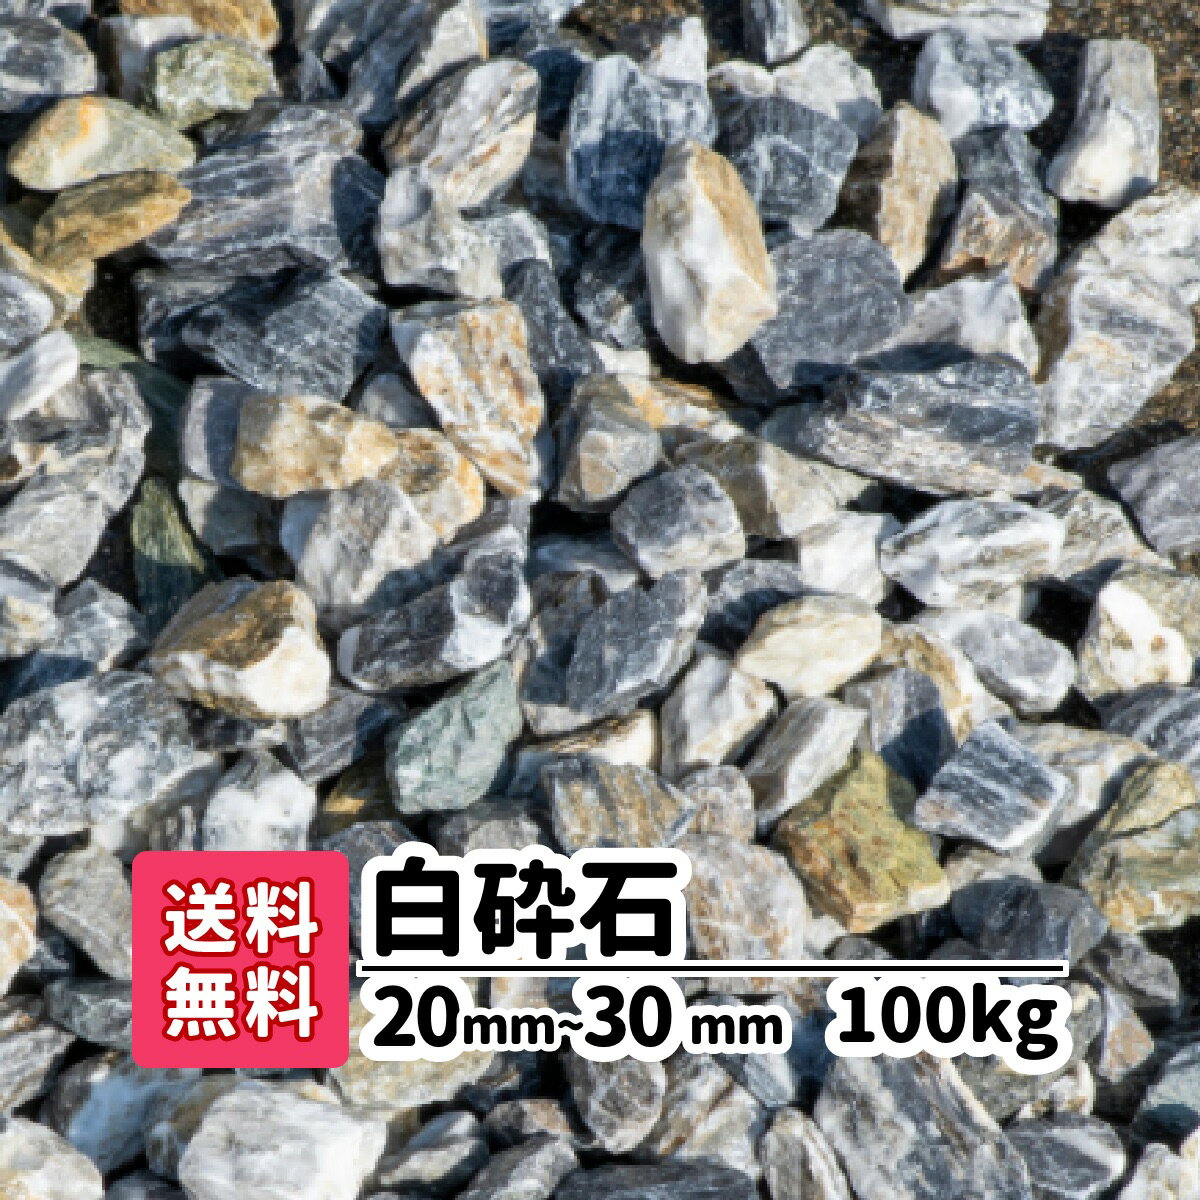 【送料無料】100kg 白砕石 20mm〜30mm 